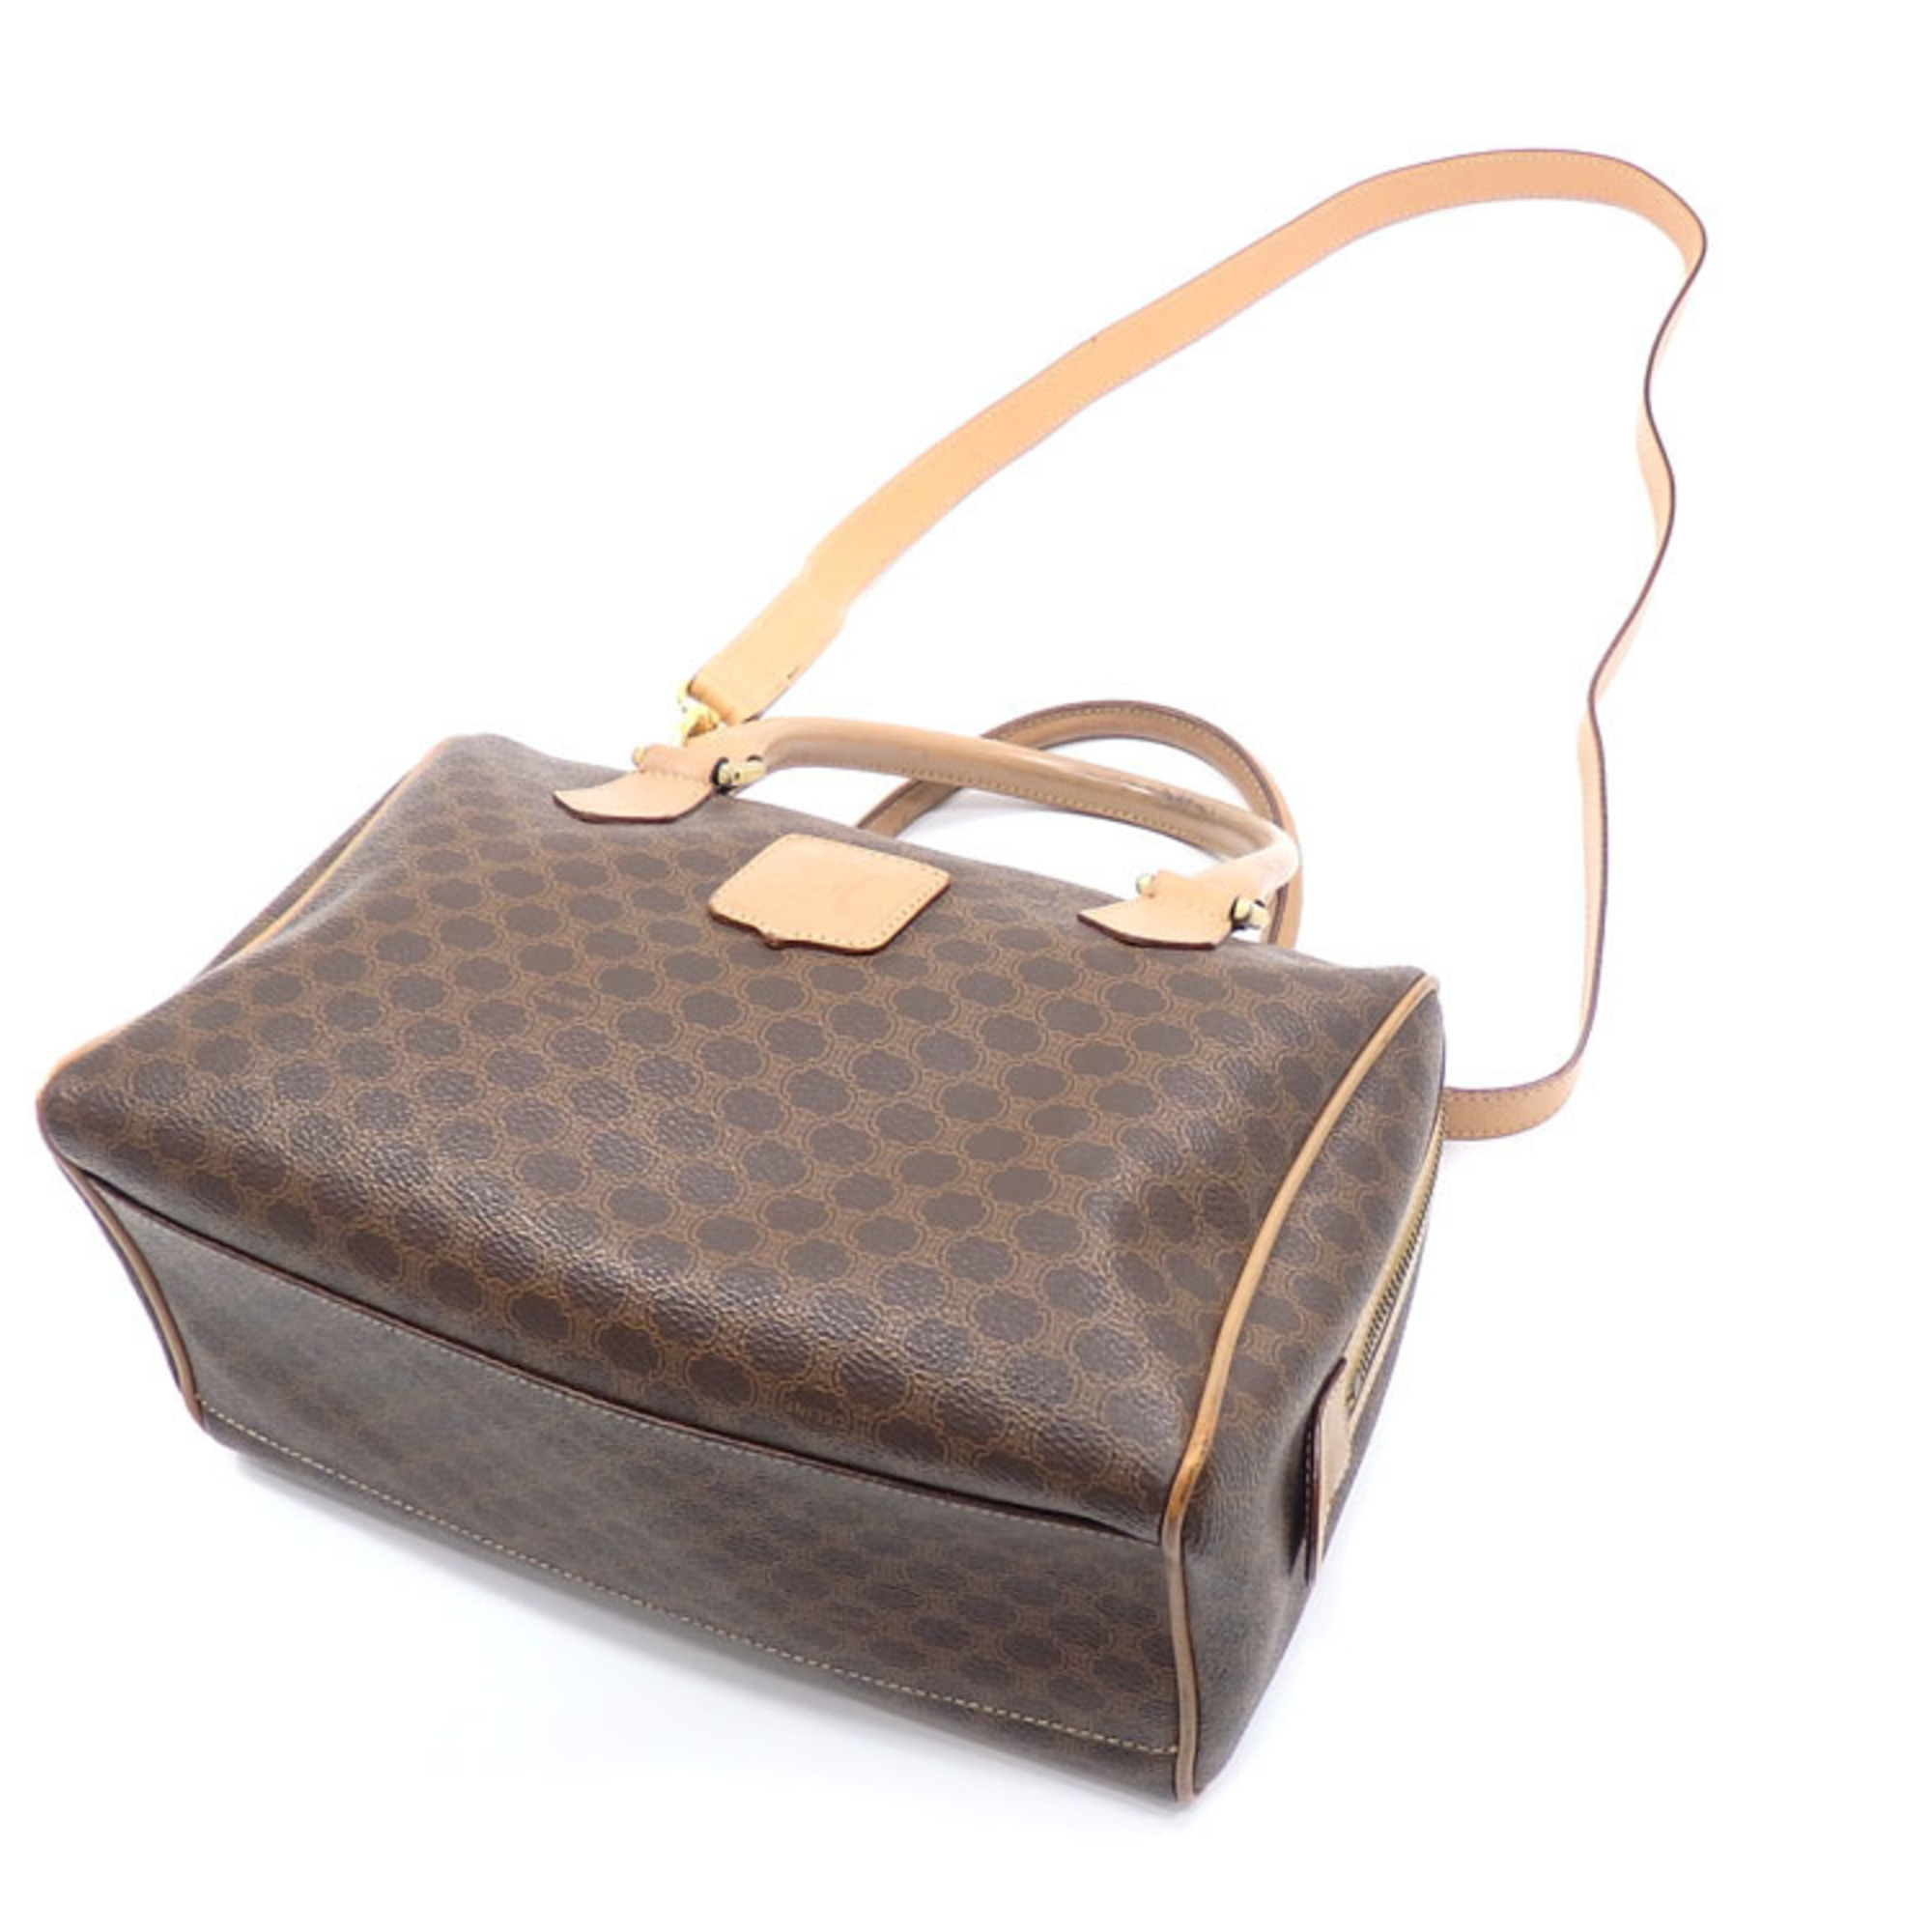 Celine handbag for women, brown, PVC, leather, macadam, Boston